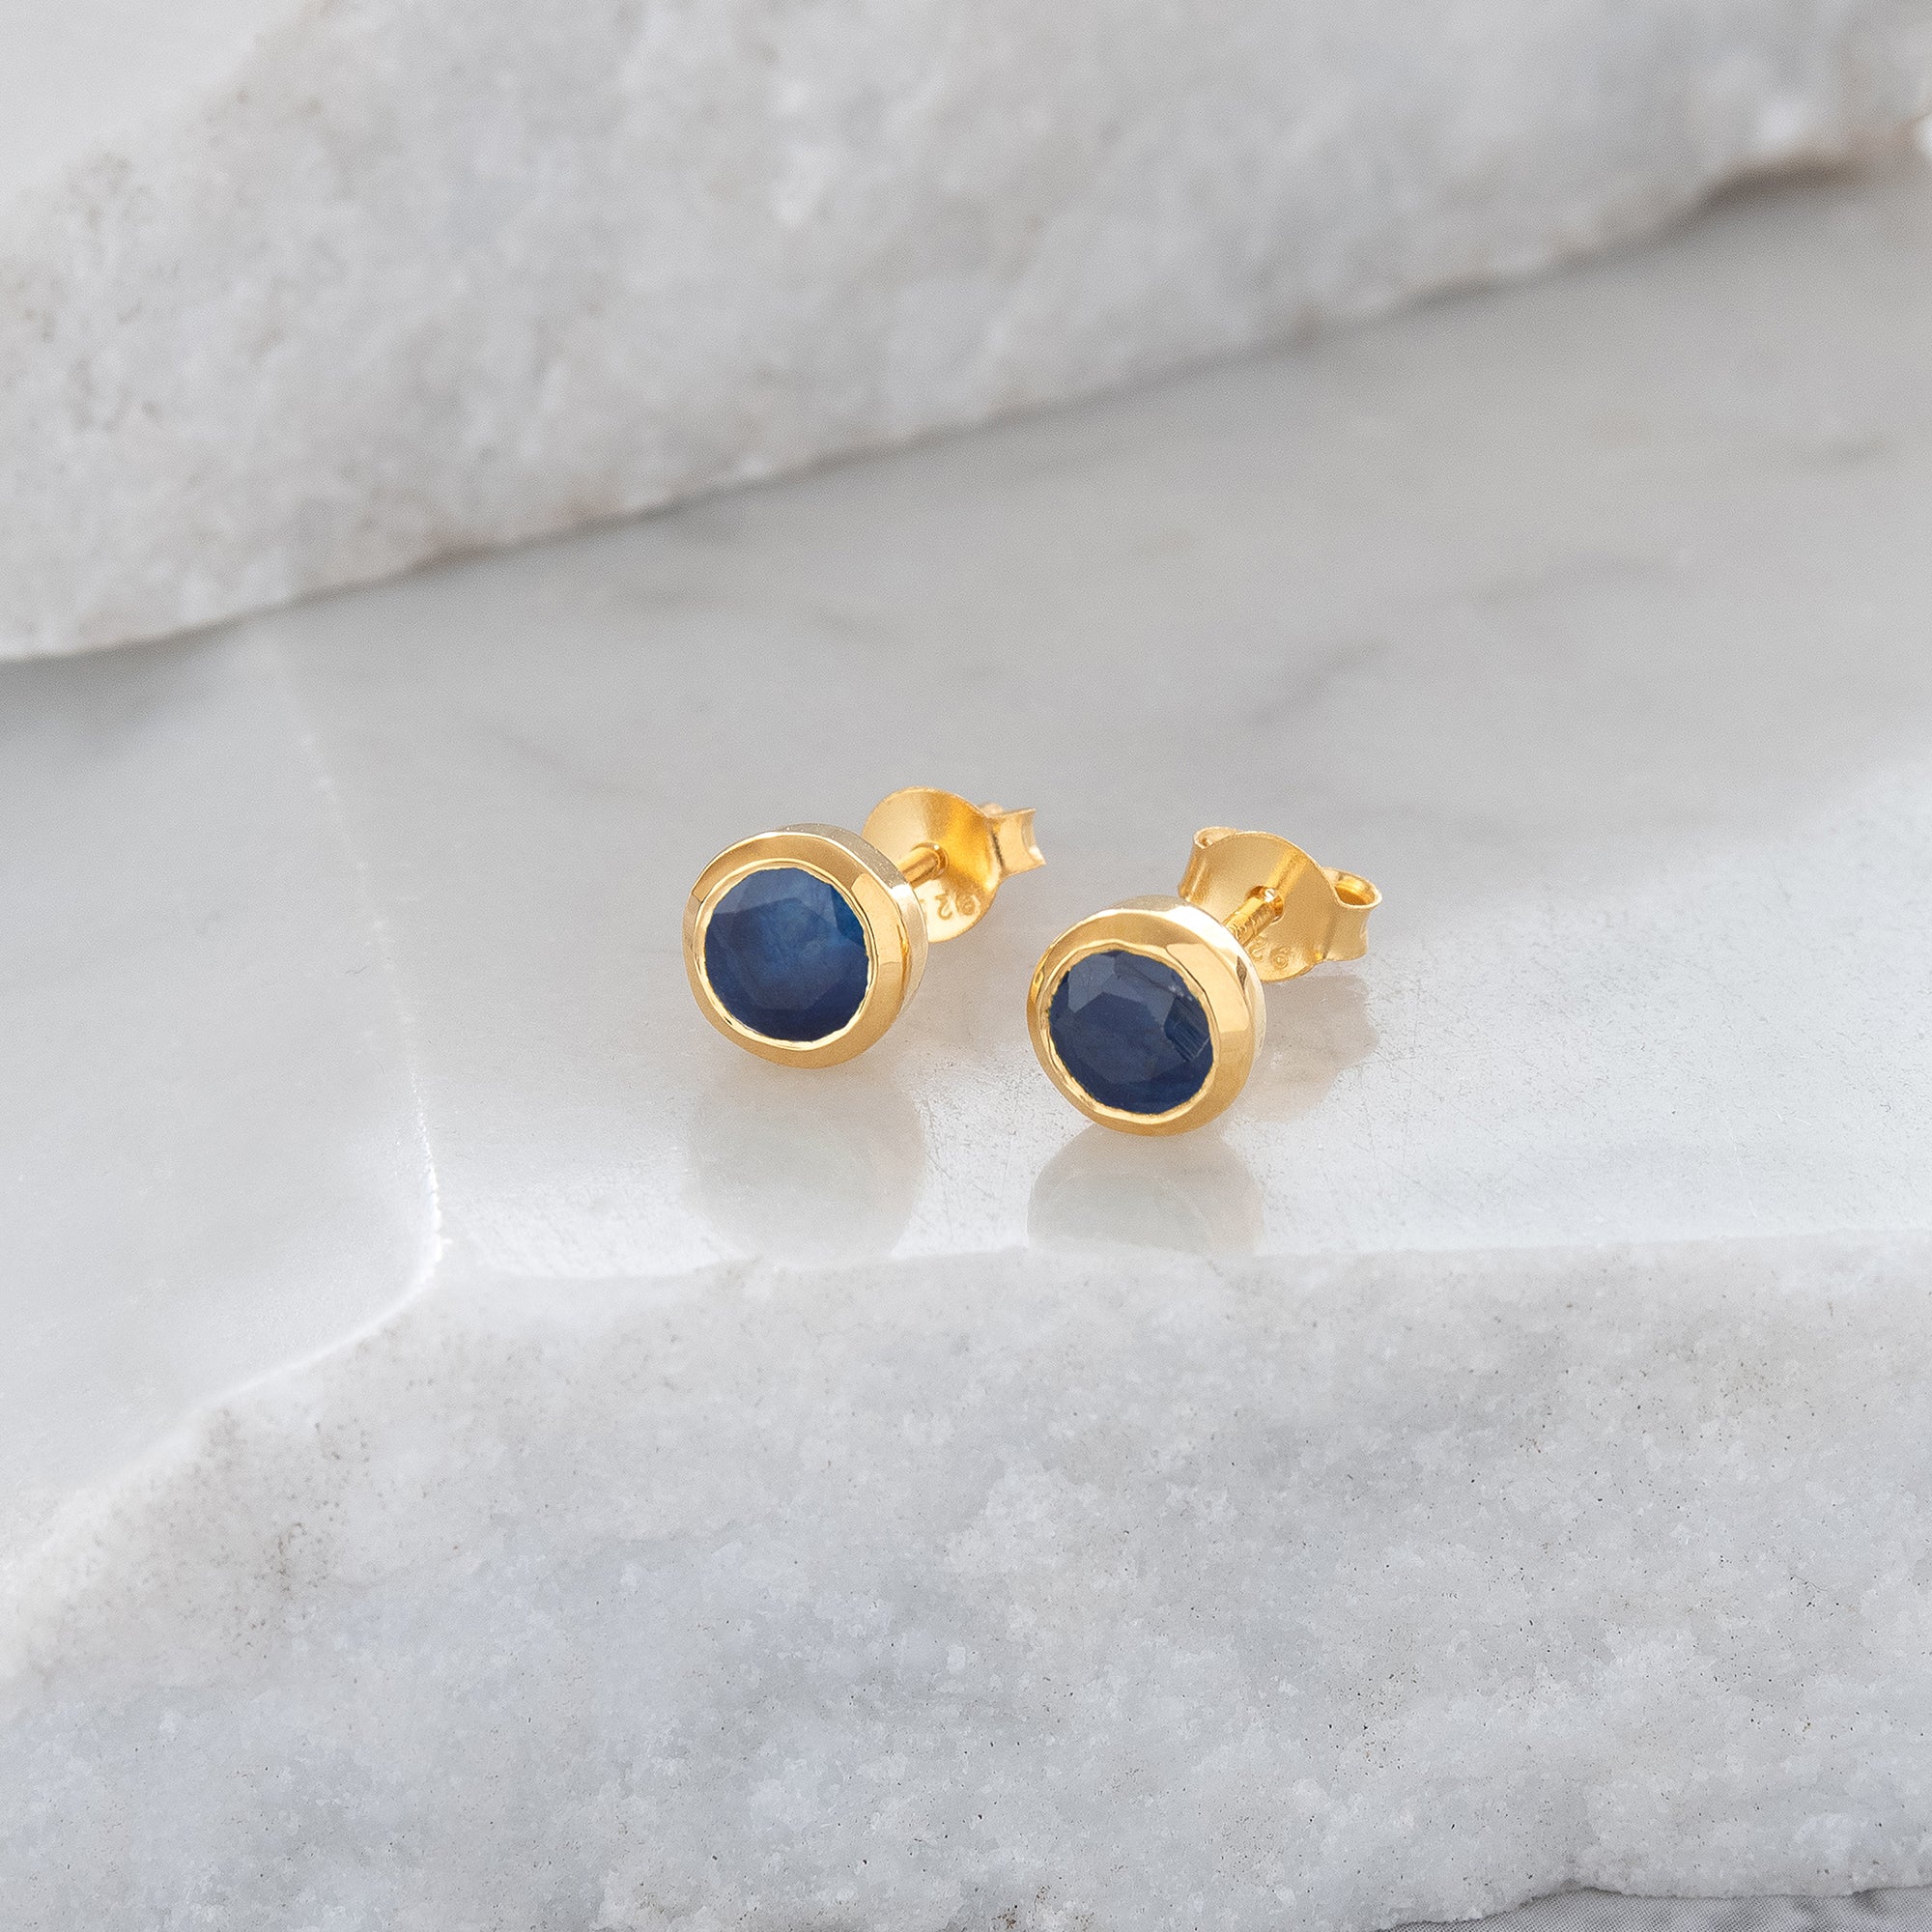 Birthstone Stud Earrings September: Sapphire and Gold Vermeil